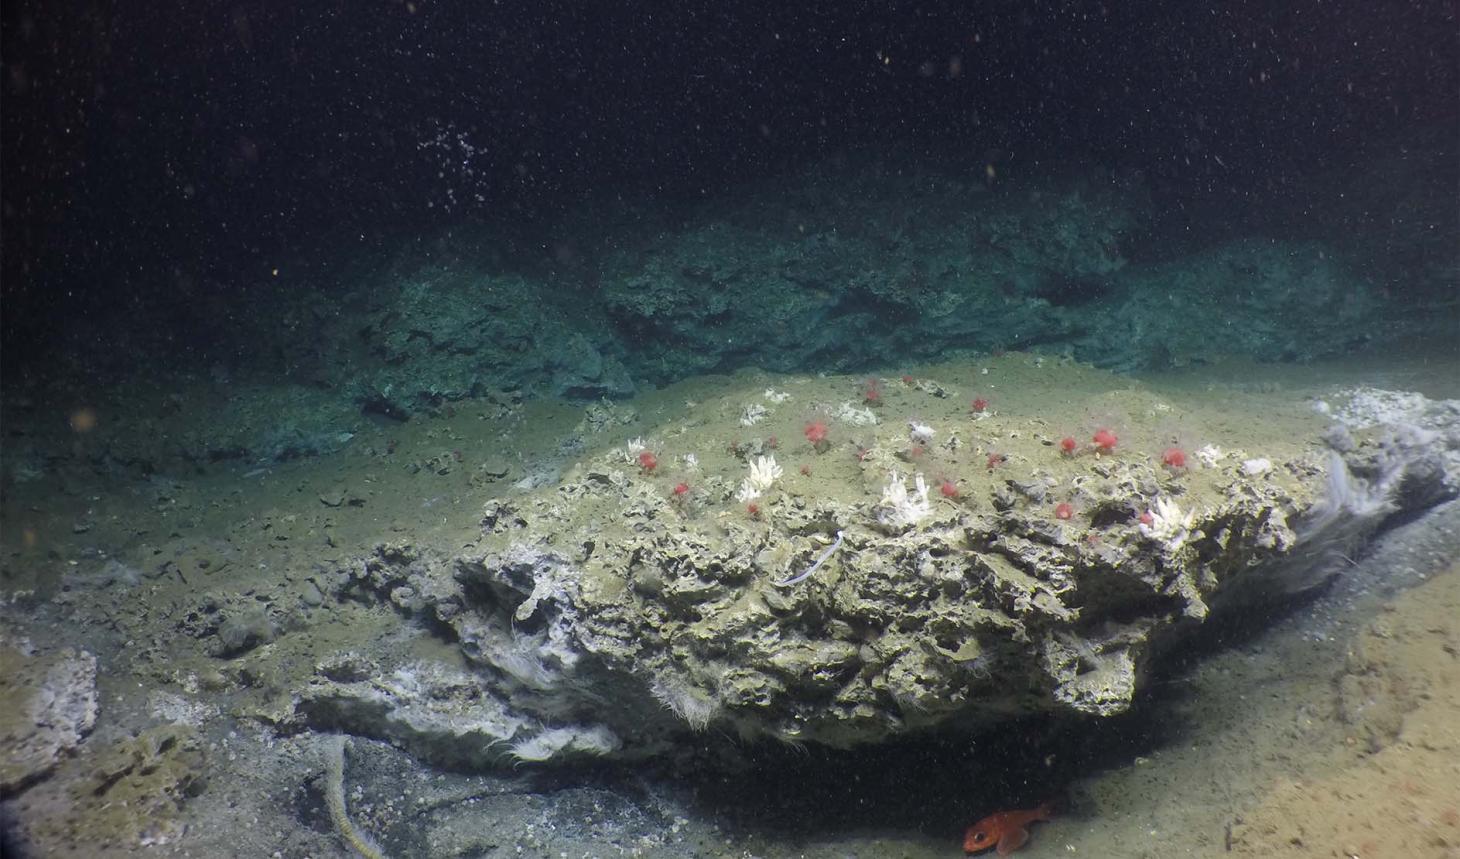 Methane spilled on ocean floor.